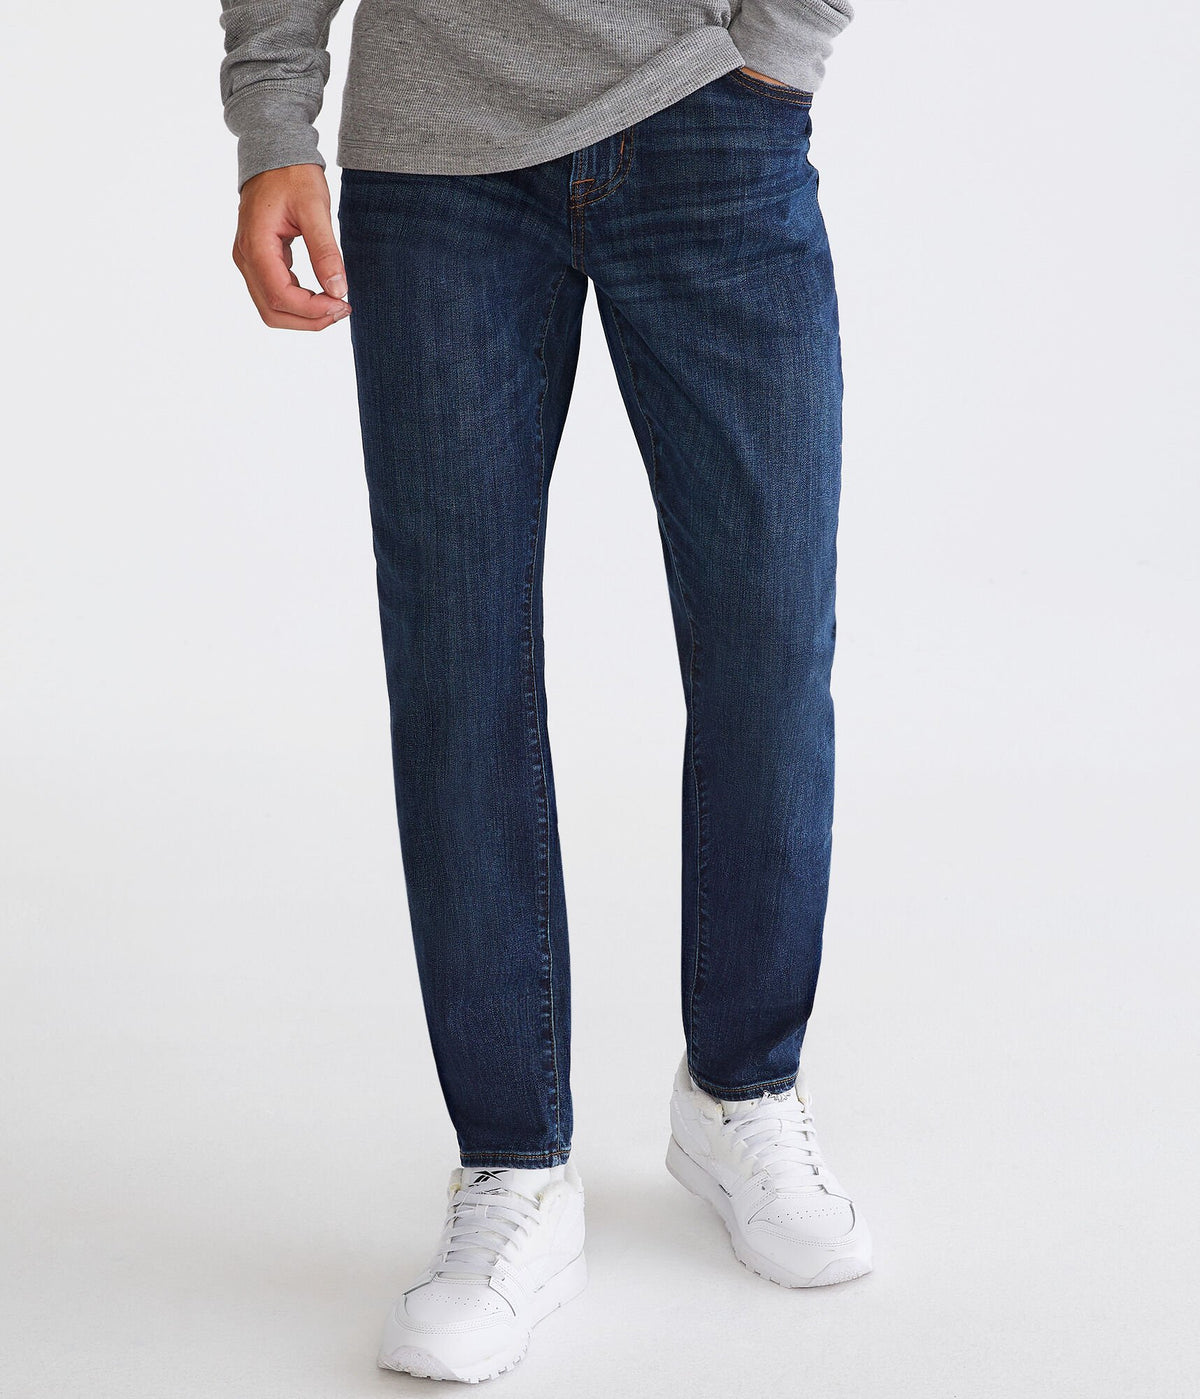 Aeropostale Mens' Athletic Skinny Jean - Blue - Size 32X30 - Cotton - Teen Fashion & Clothing Dark Wash